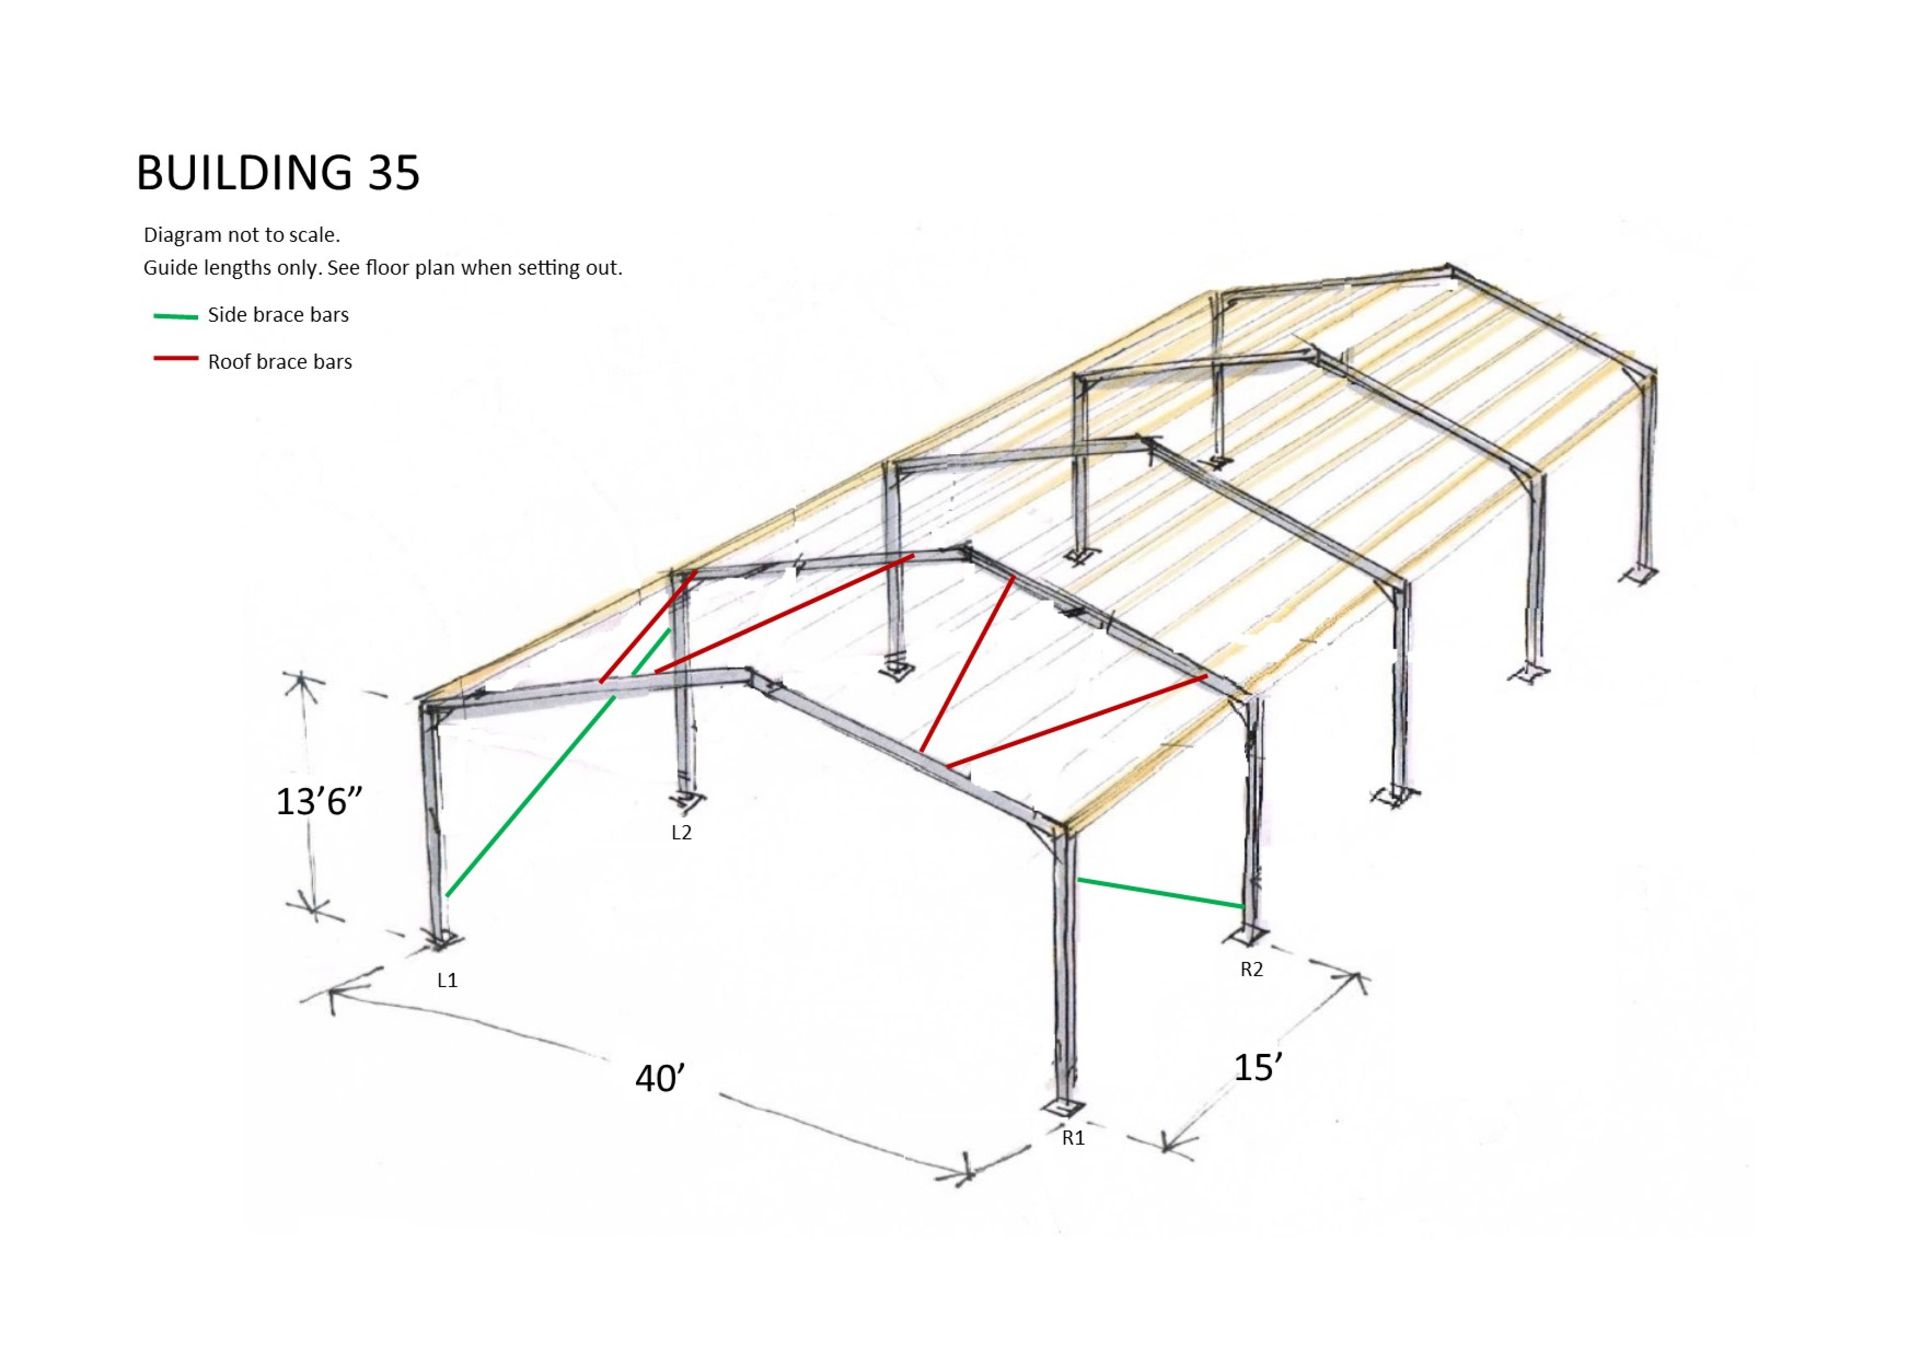 Steel framed building 60ft long x 40 ft wide x 13.5 ft @ eaves 12 .5 deg roof pitch - Image 11 of 12